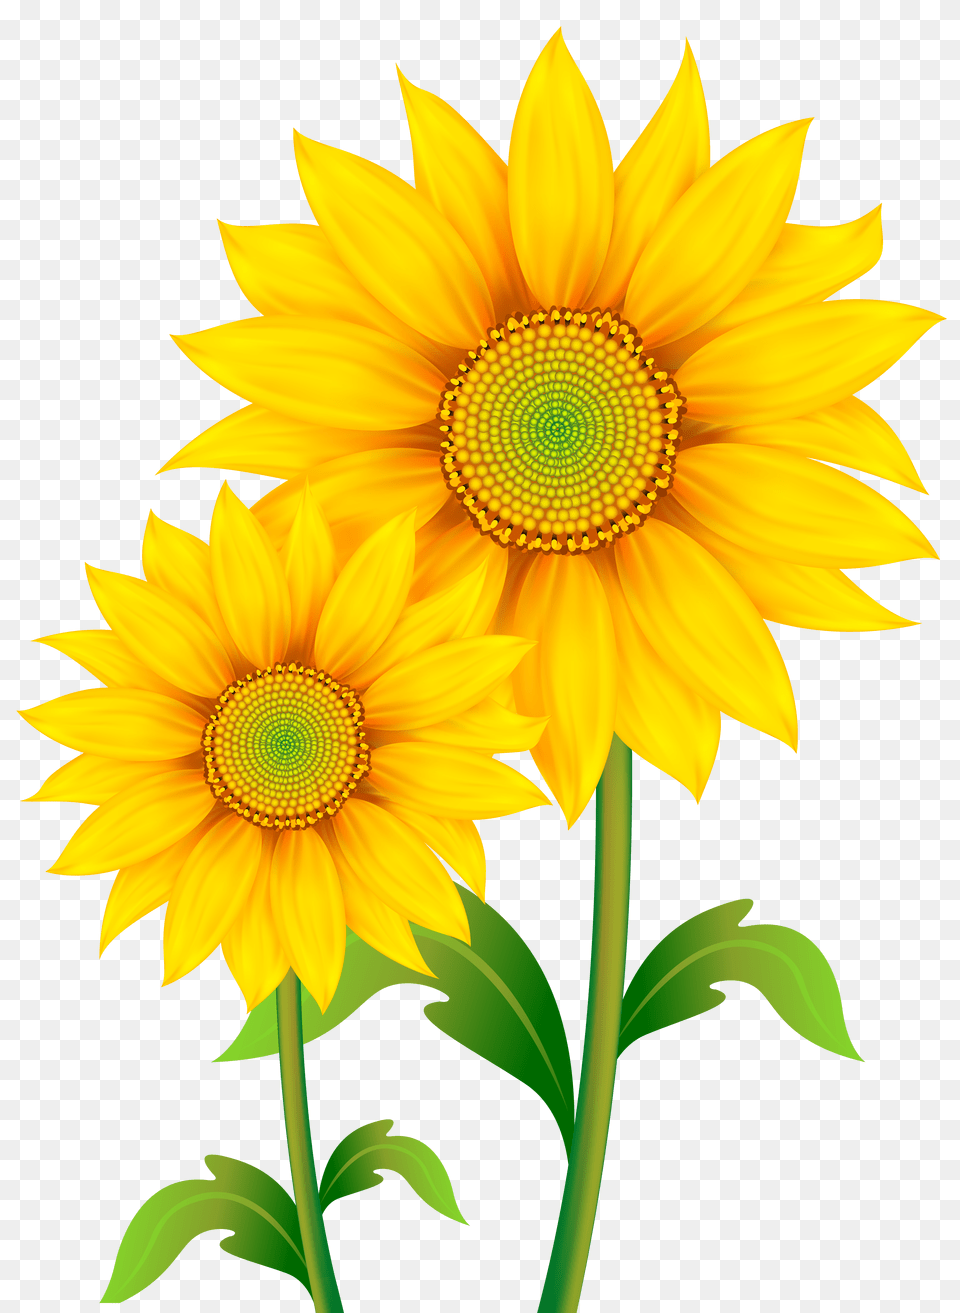 Sunflowers Transparent Images All Sun Flower Clipart Png